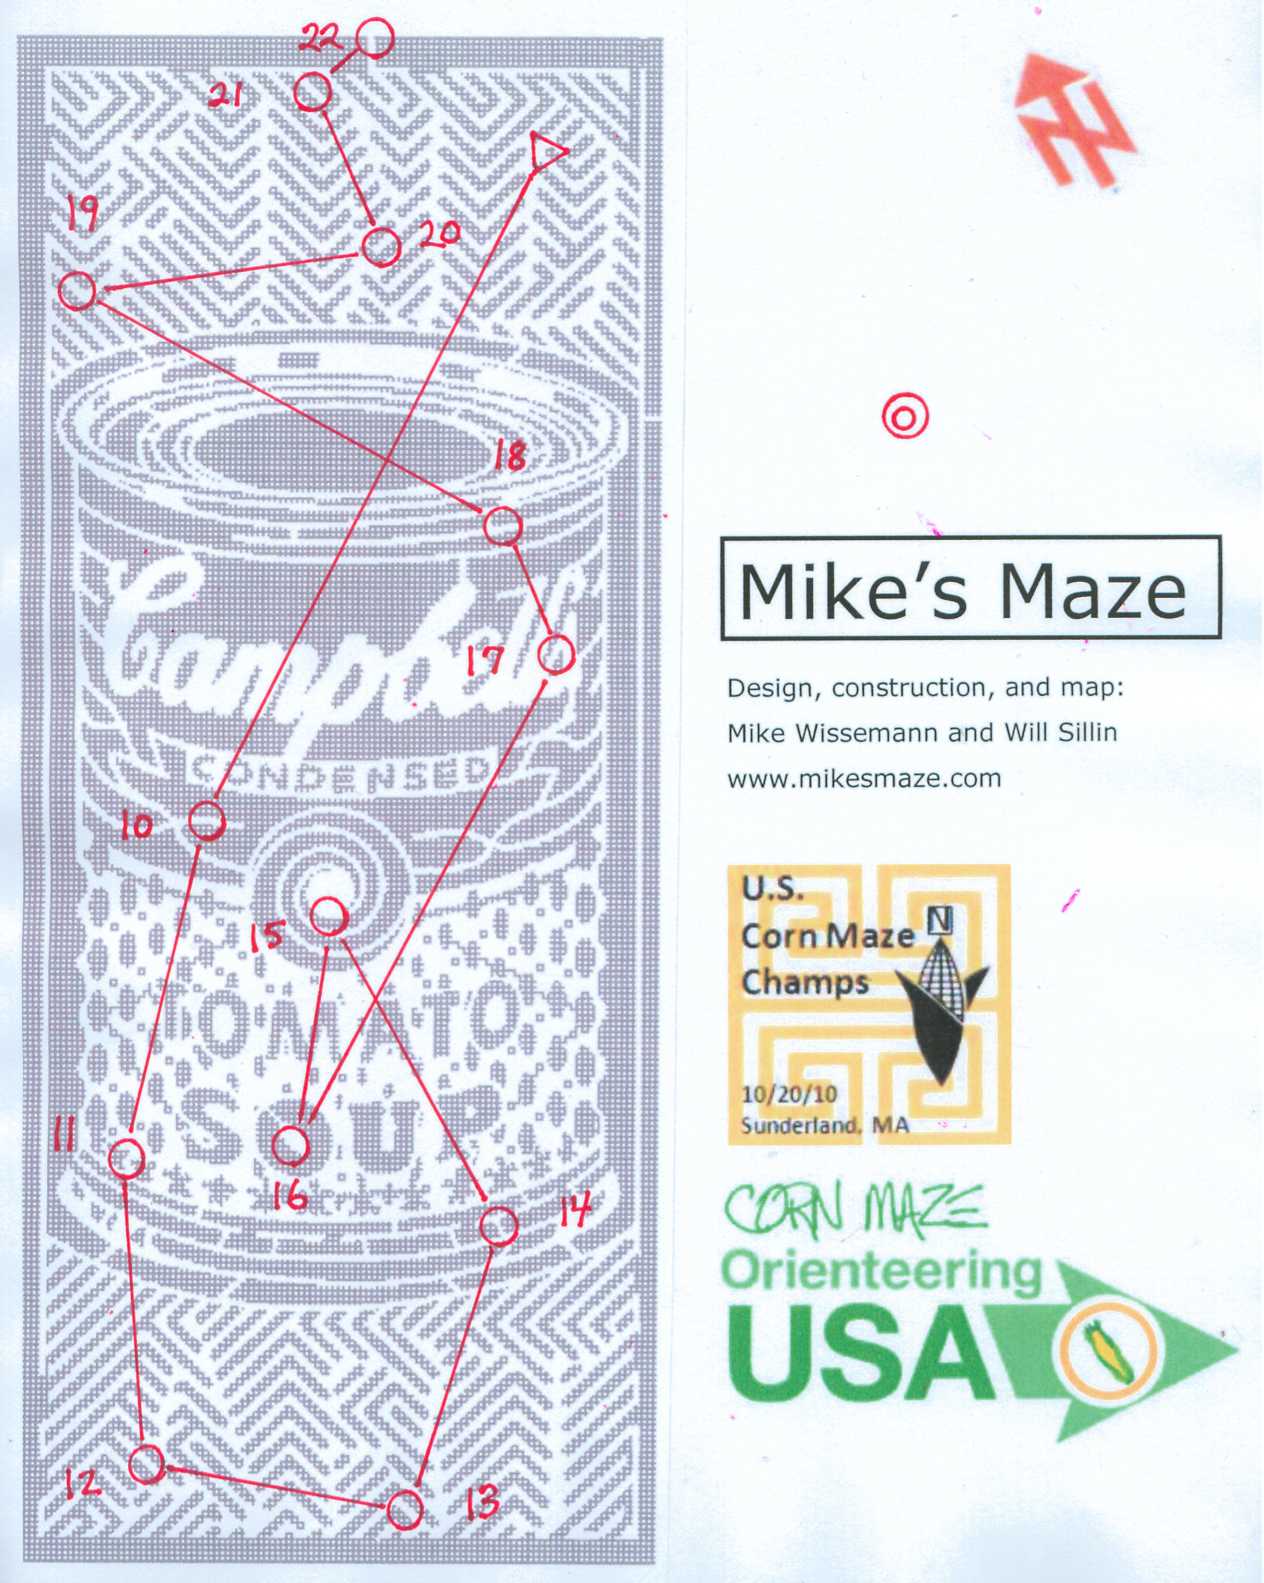 US Corn Maze Orienteering Classic Champs - Part 2 (20-10-2010)